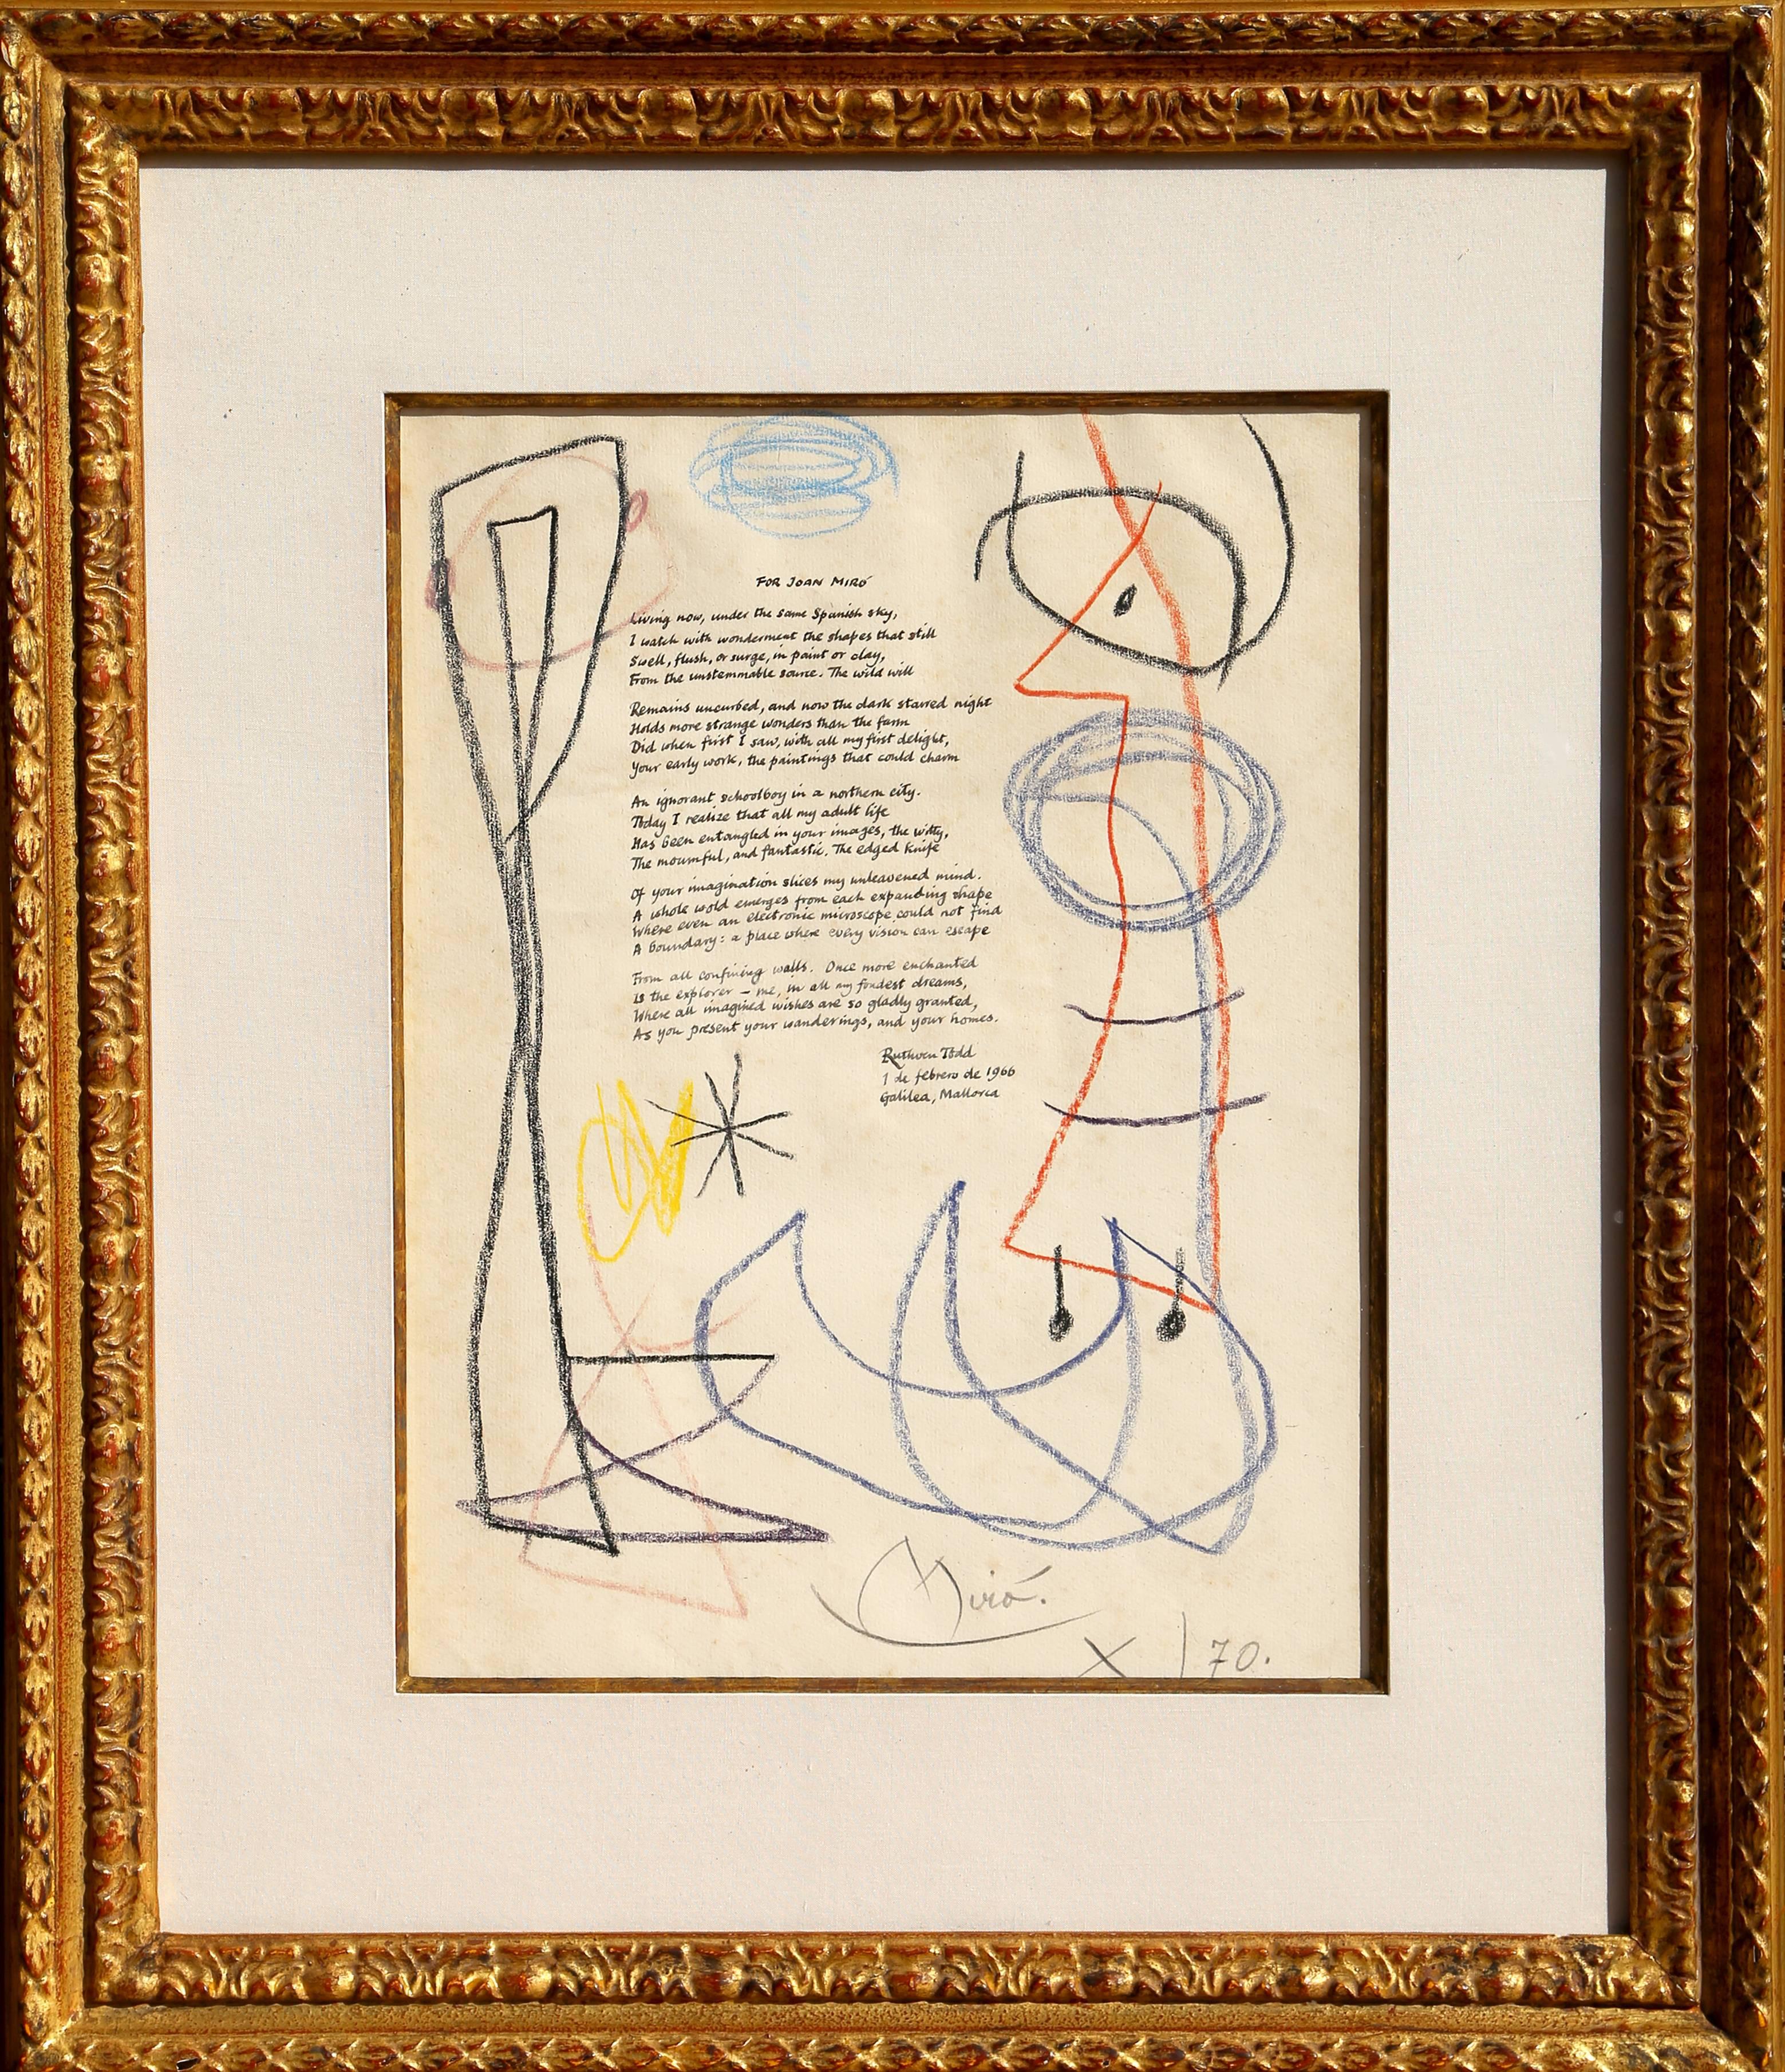 Abstract Drawing Joan Miró - Ruthven Todd Poème